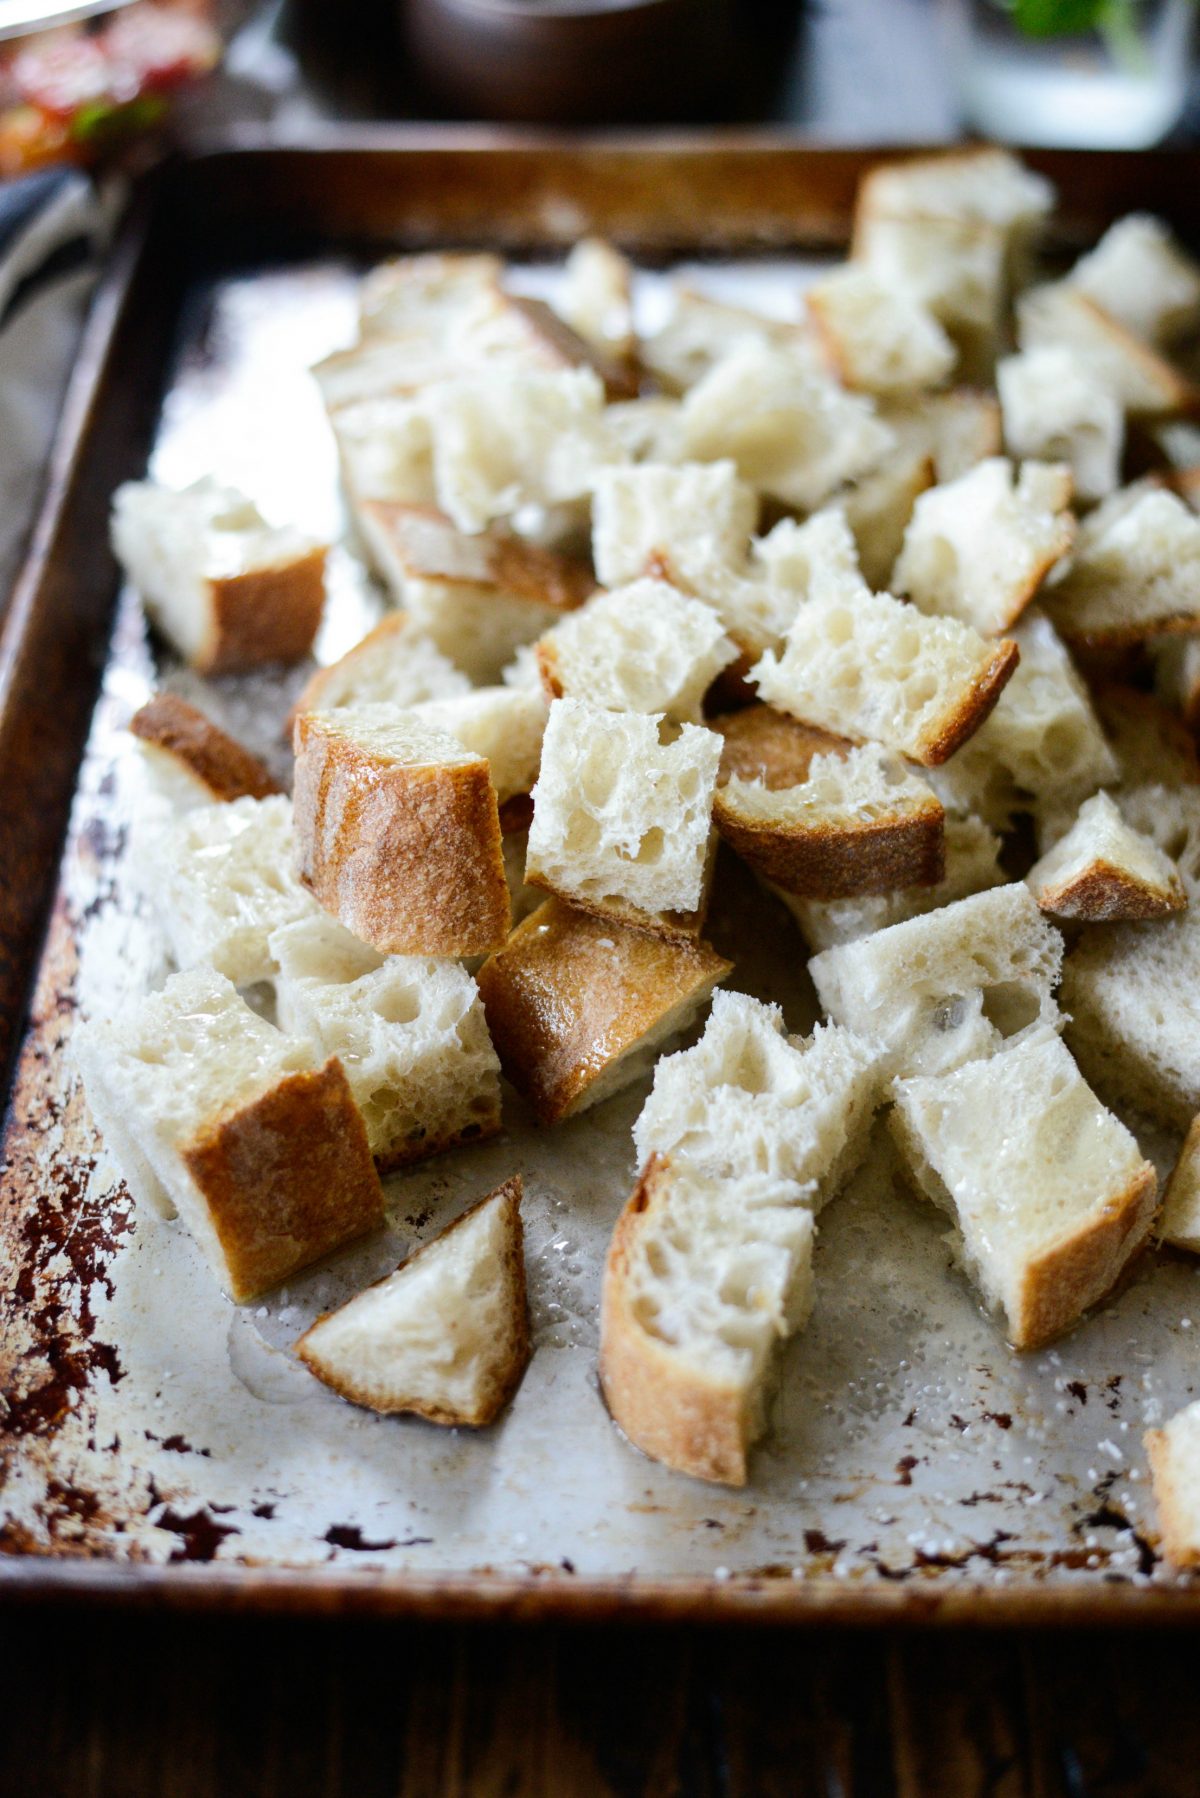 cubed bread on rimmed baking sheet